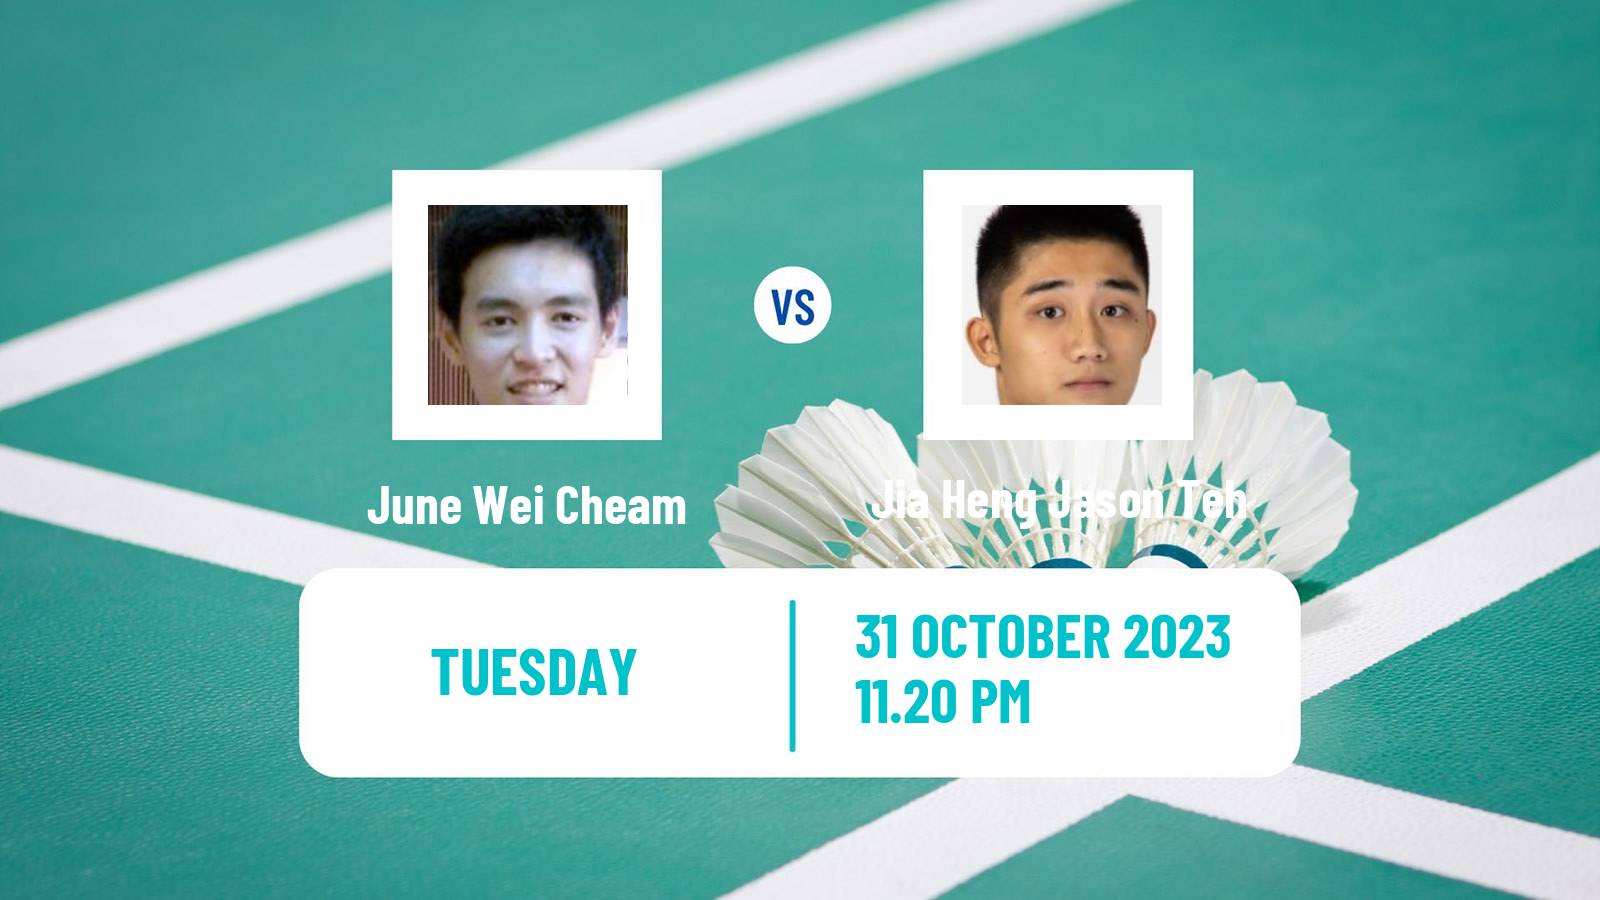 Badminton BWF World Tour Kl Masters Malaysia Super 100 Men June Wei Cheam - Jia Heng Jason Teh